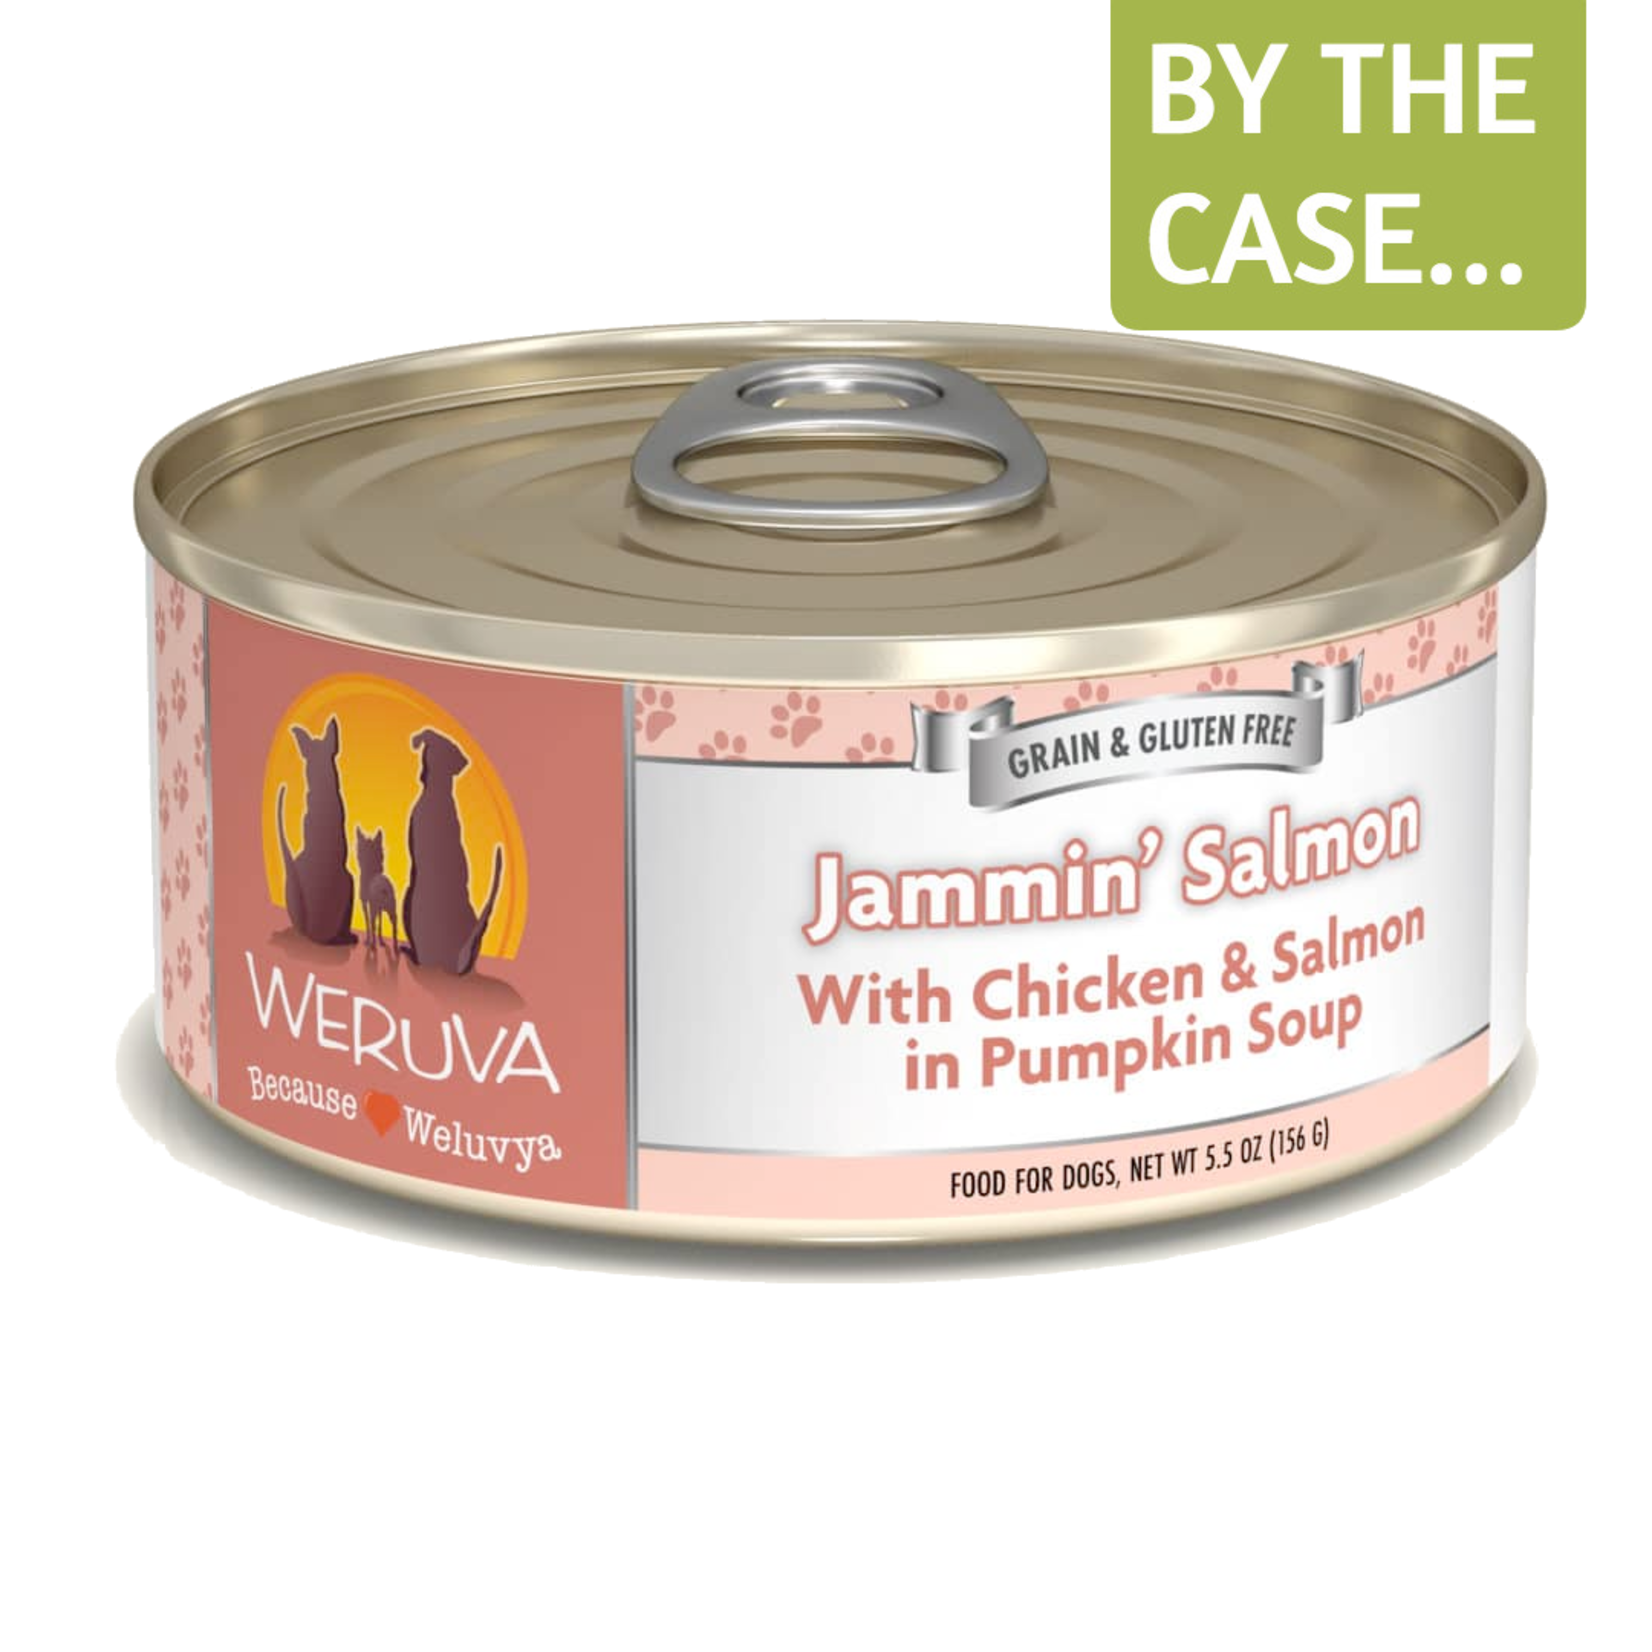 Weruva Weruva Classic Wet Dog Food Jammin' Salmon with Chicken and Salmon in Pumpkin Soup 5.5oz Can Grain Free